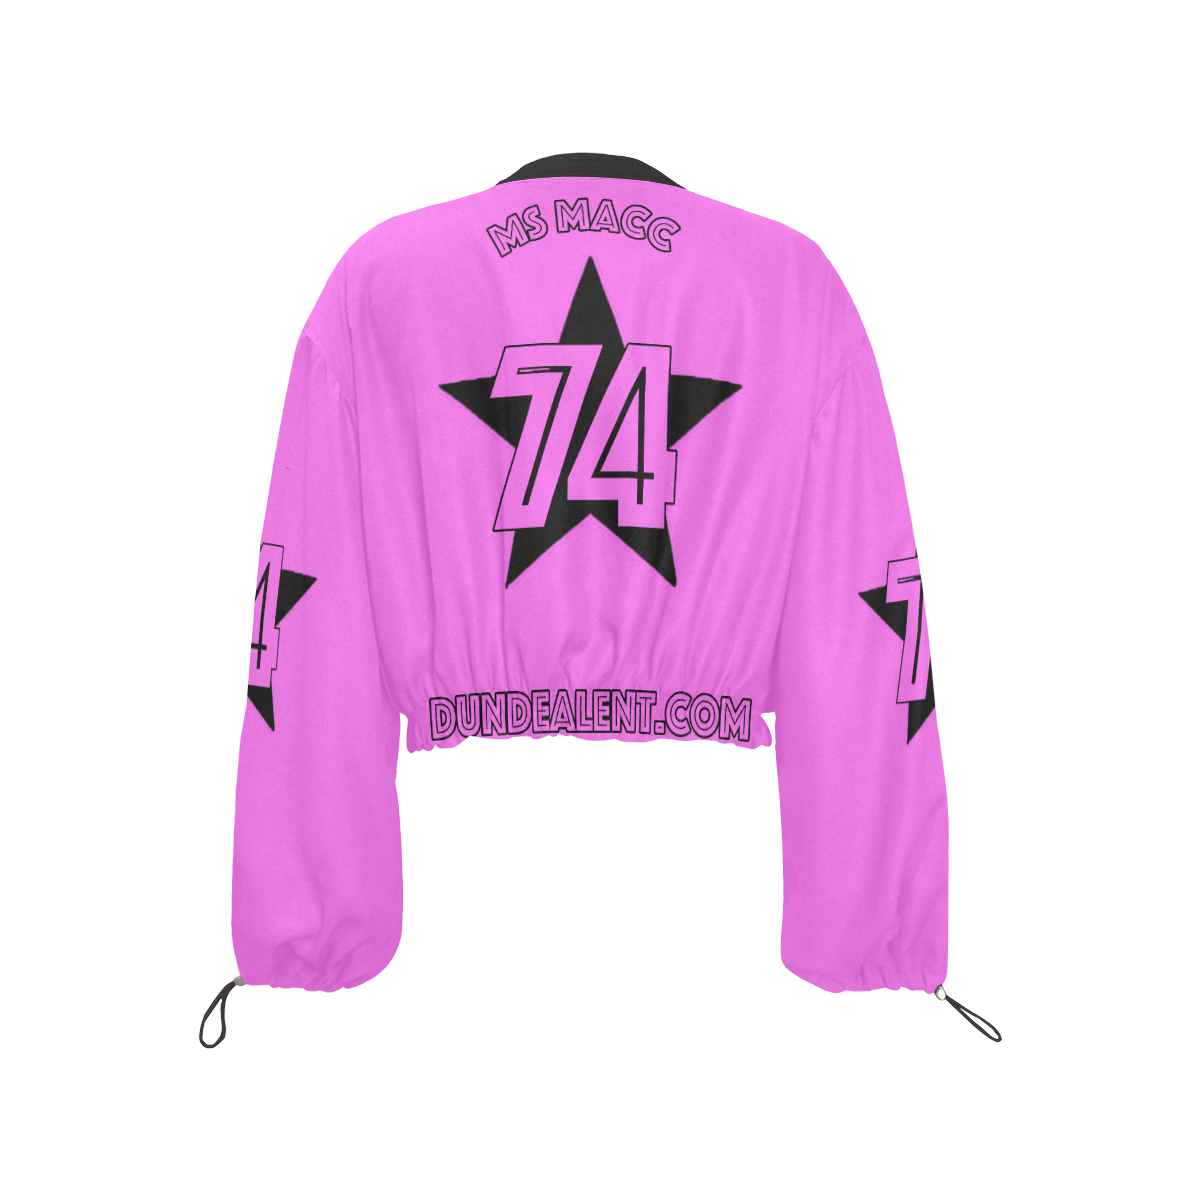 Ms Macc 5 star II Black/Pink back Cropped Chiffon Jacket for Women (Model H30)